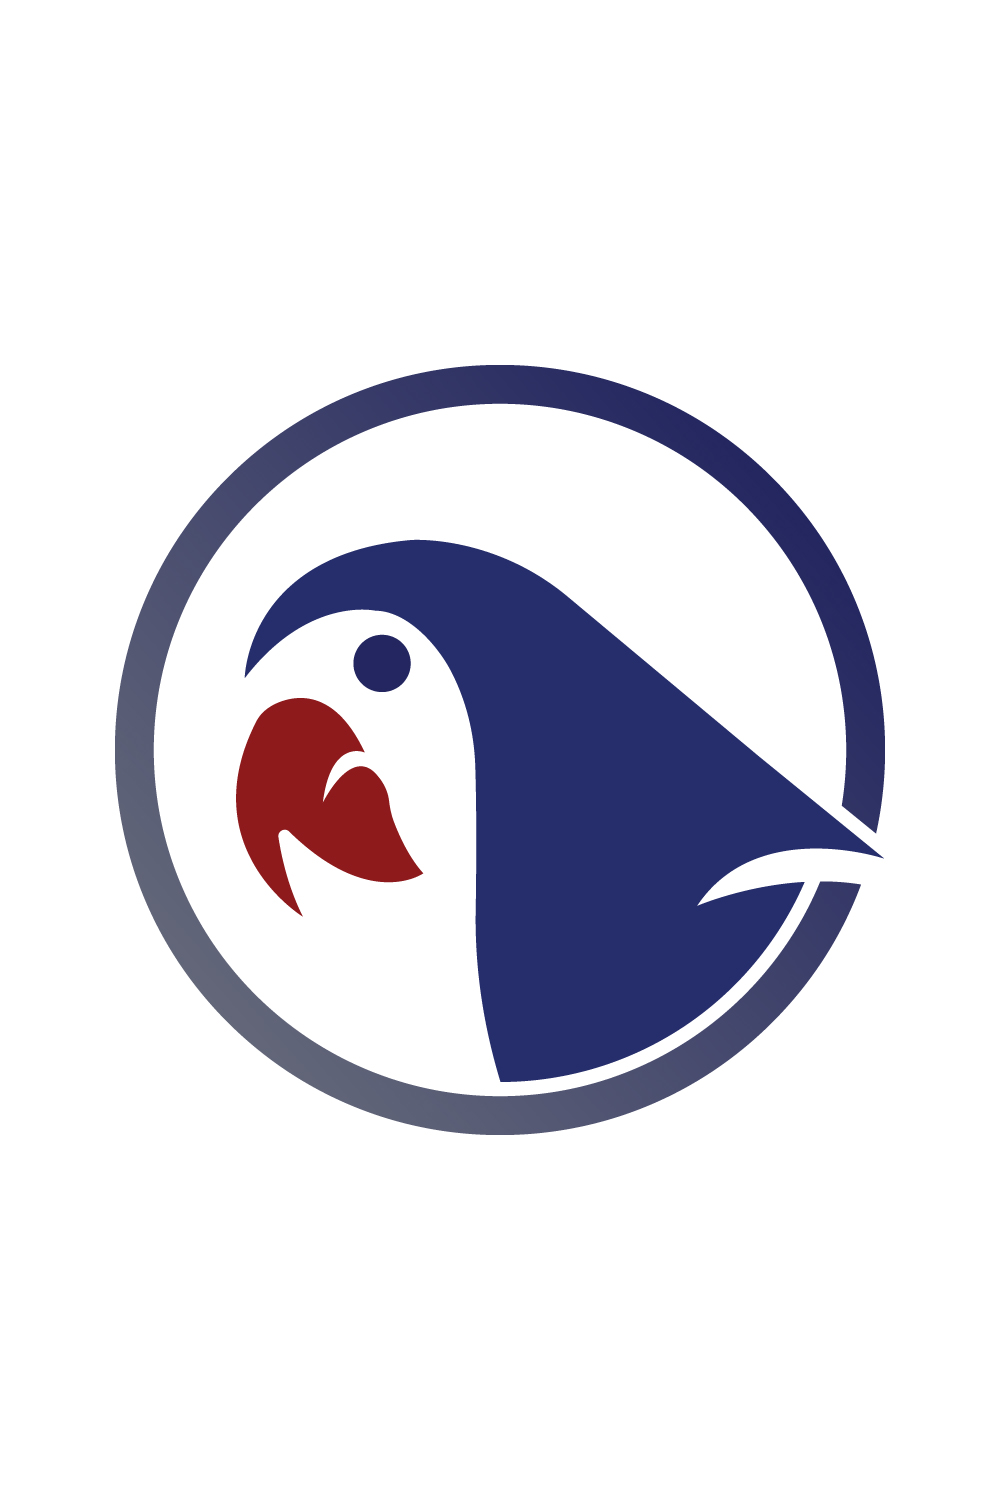 Bird logo design Parrot Bird logo circle design Beautiful Bird face logo design pinterest preview image.